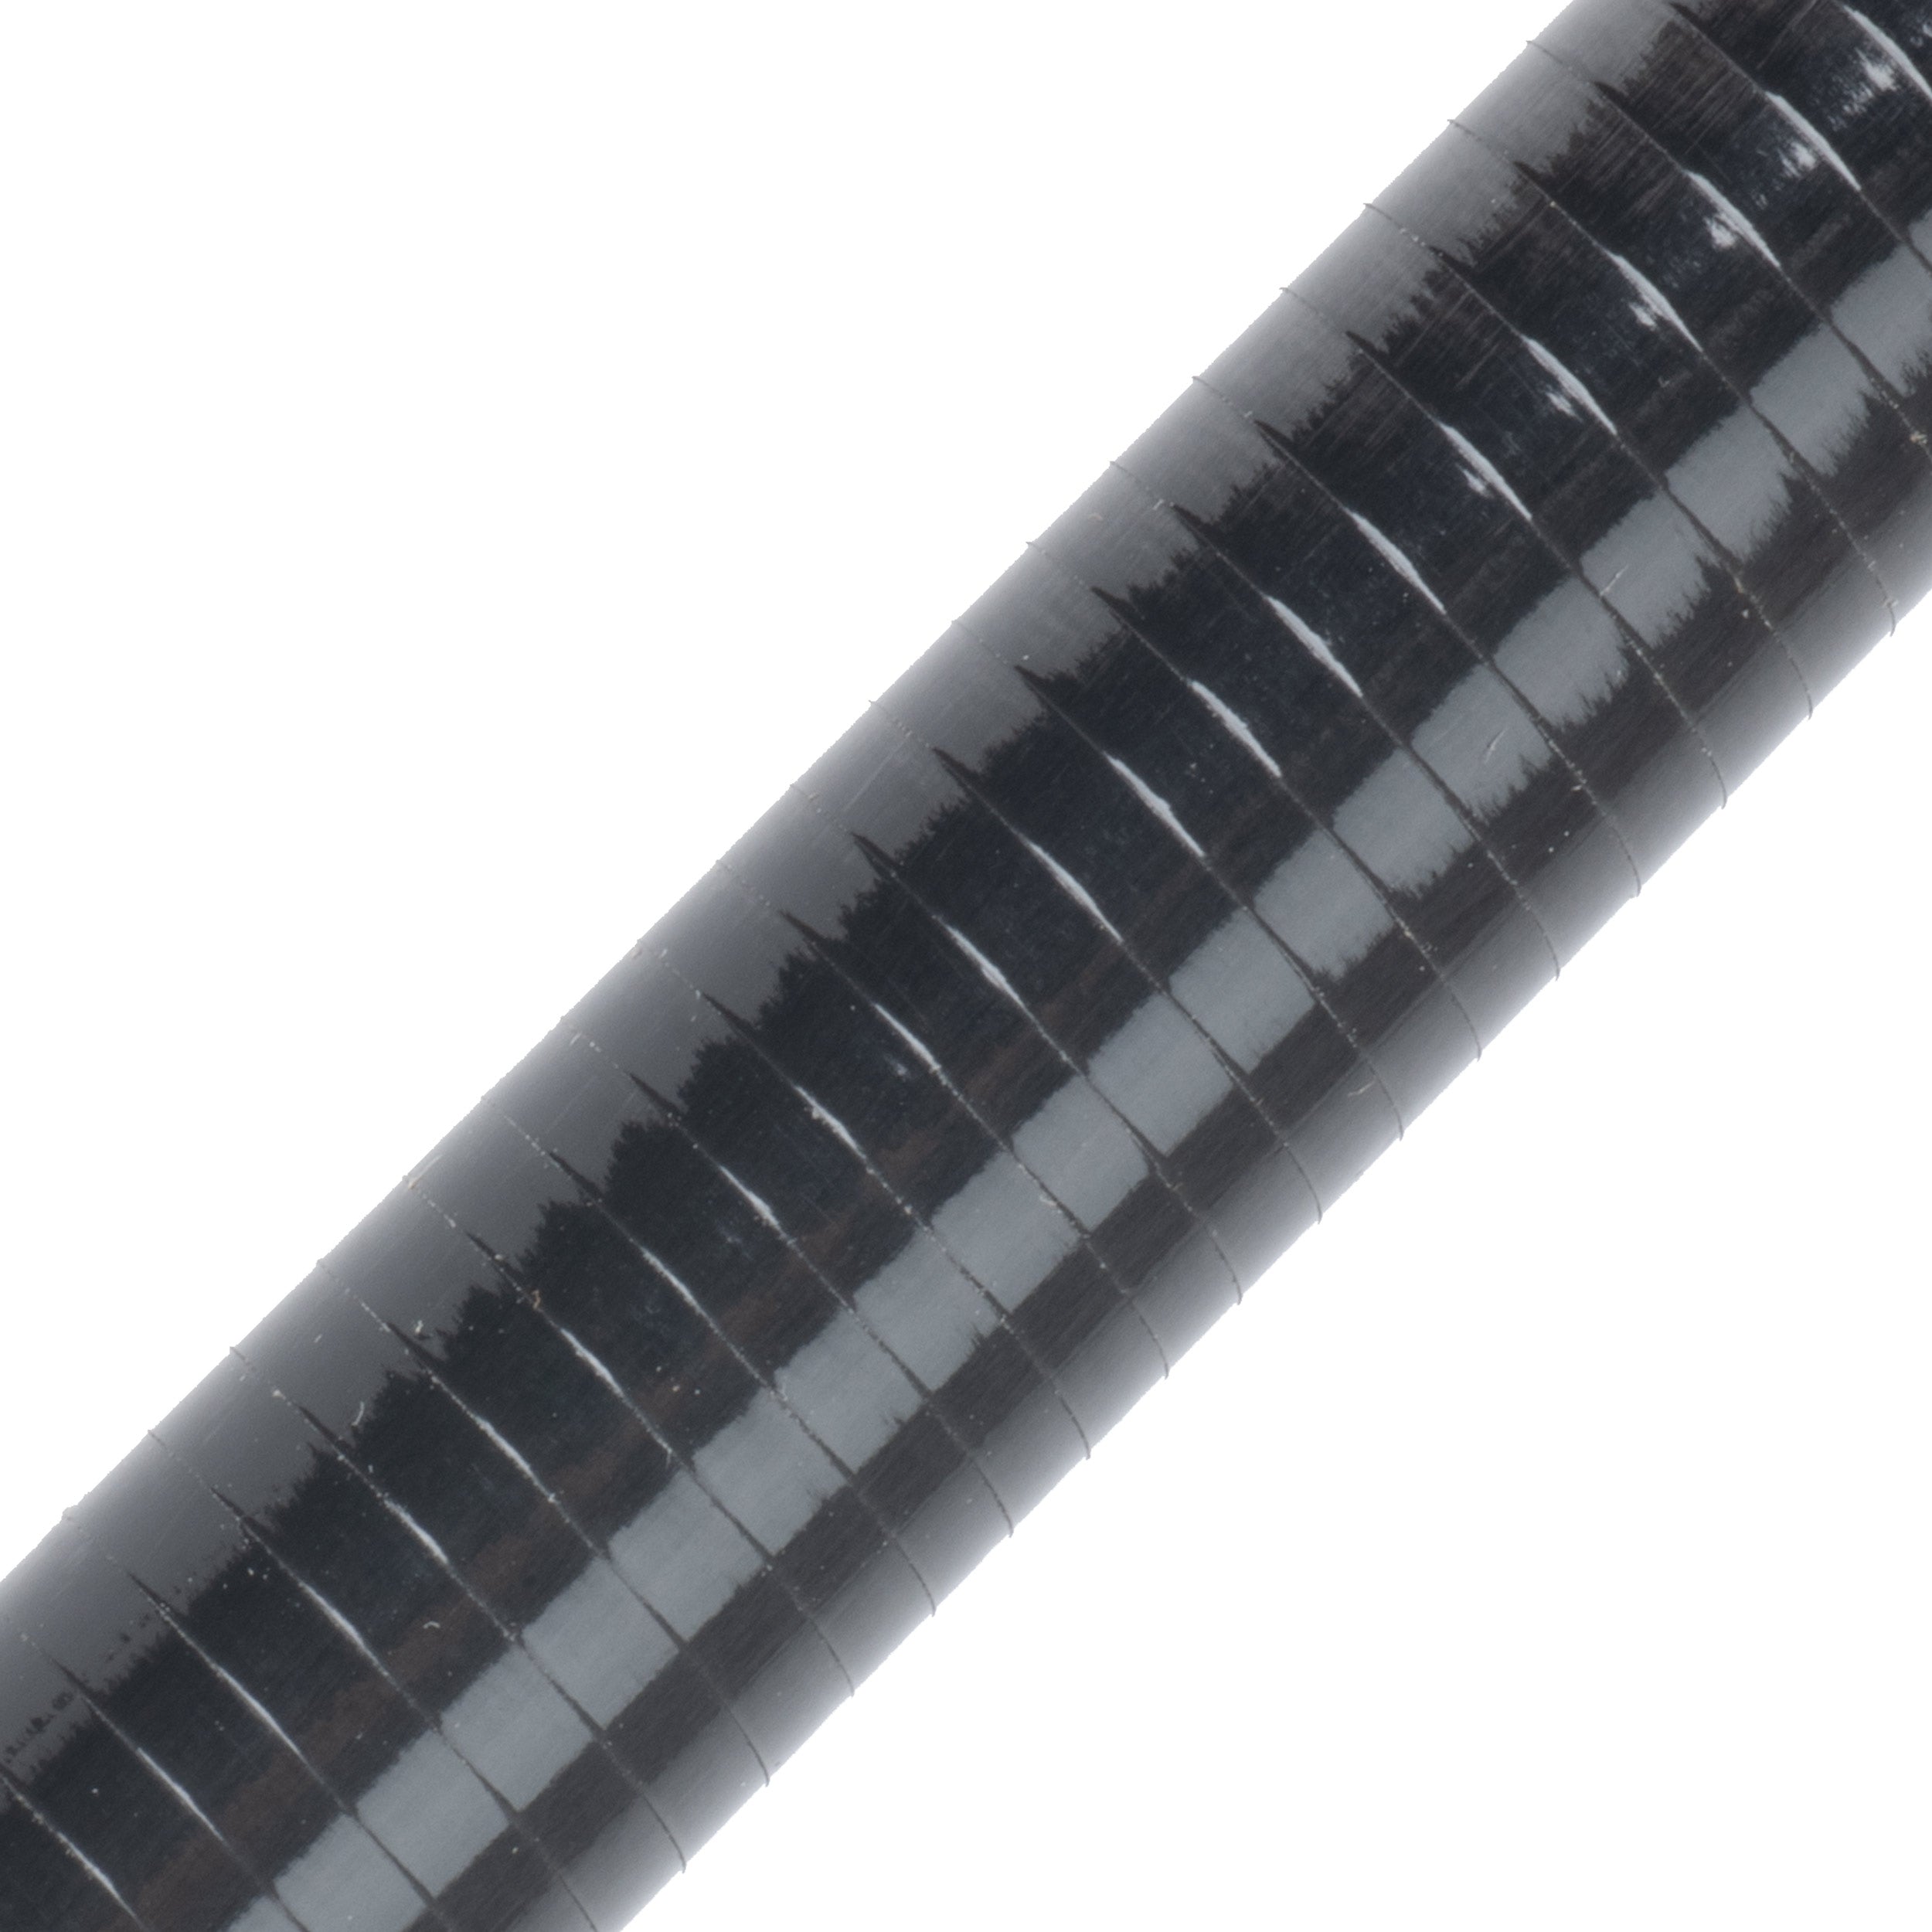 Cashion CR6r Carbon Fiber Mag Bass Rod Blank - CR6r-iMB904